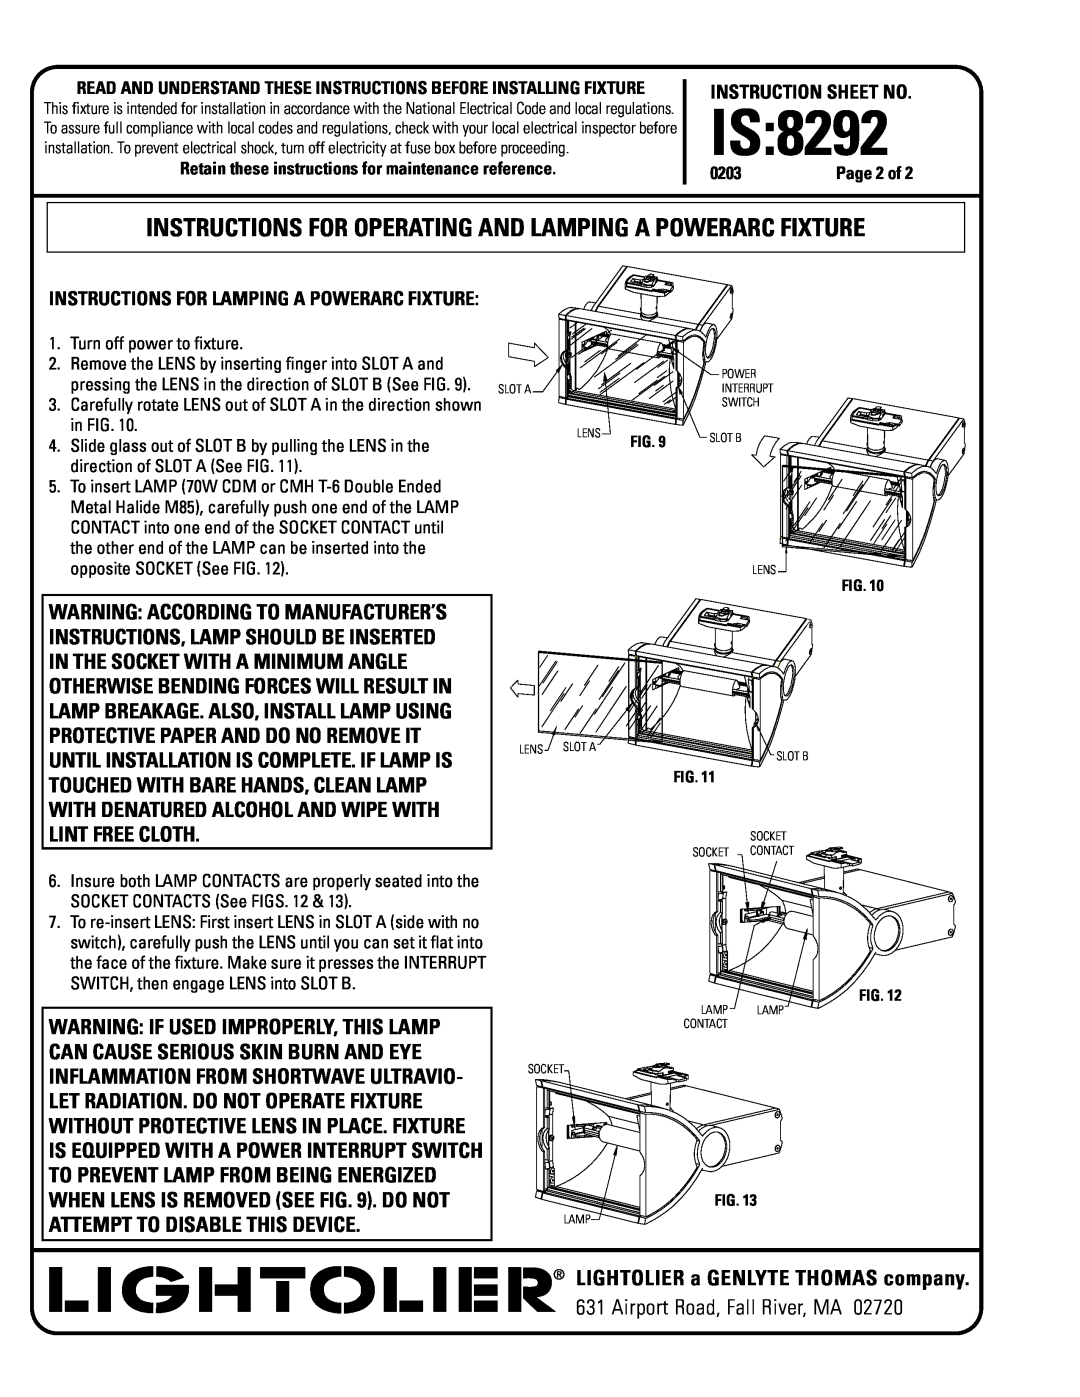 Lightolier 8292 instruction sheet Instructions For Lamping A Powerarc Fixture, Is, Instruction Sheet No 